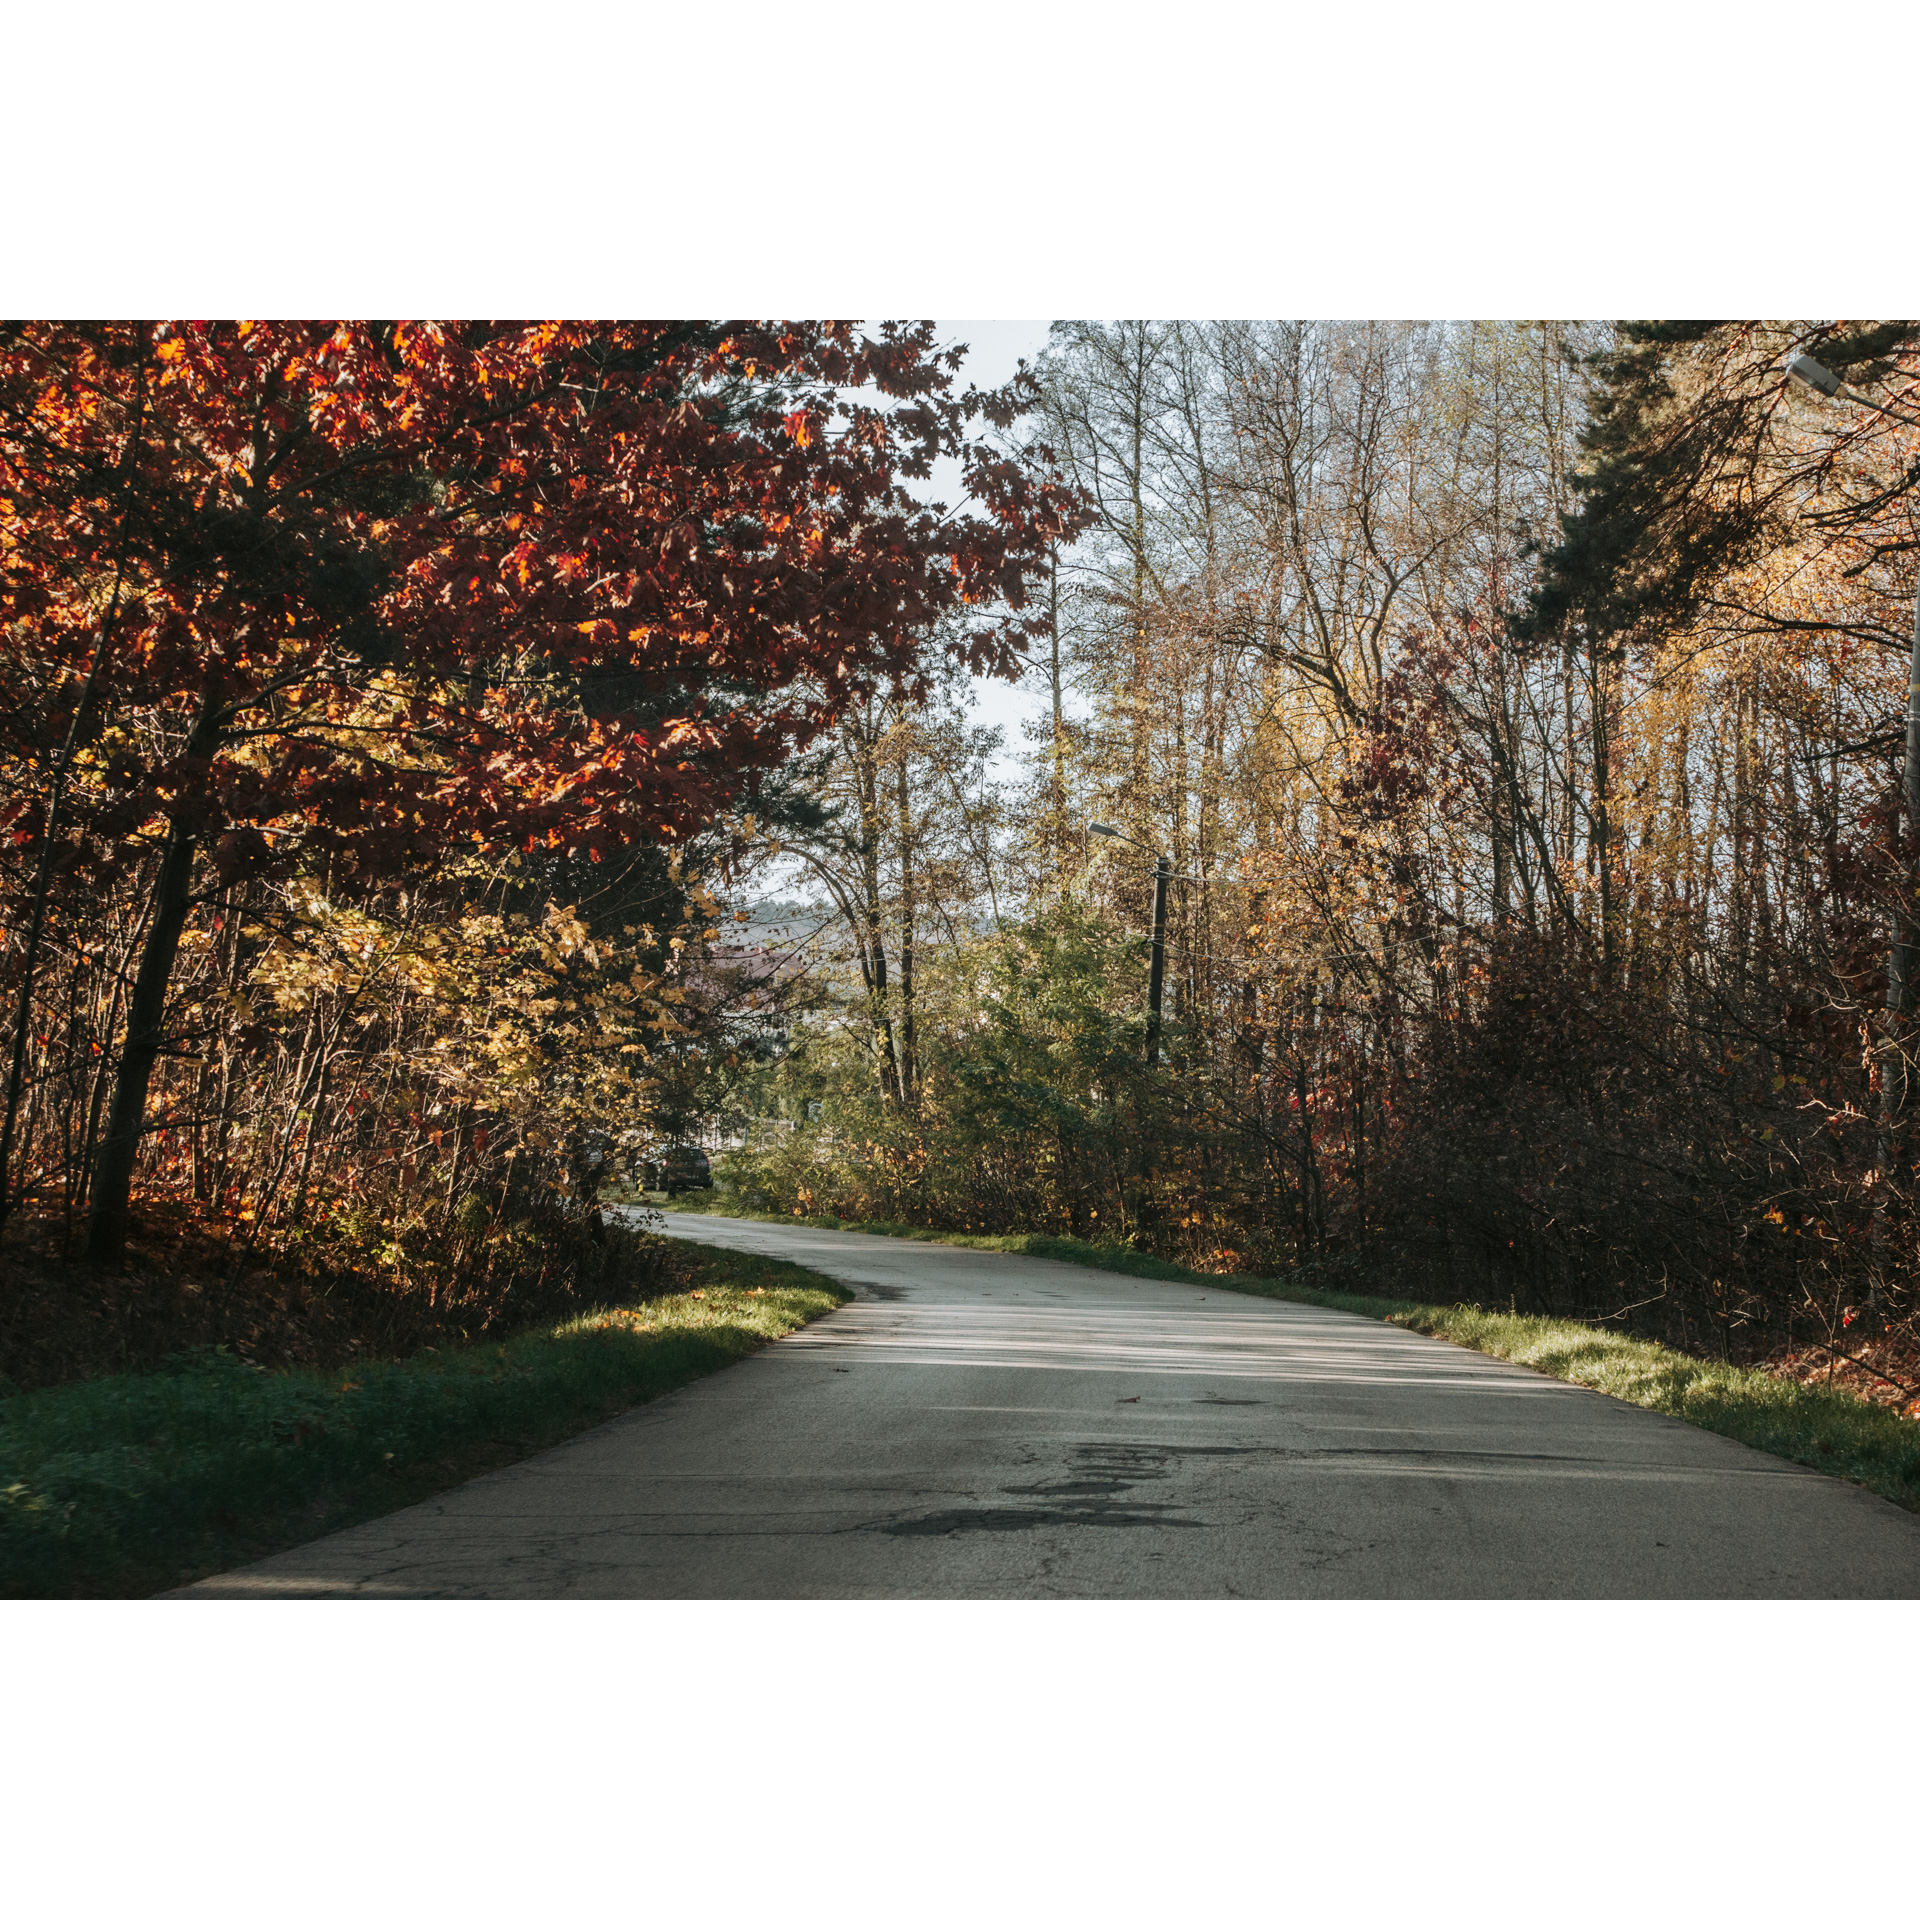 Asphalt road turning left leading through the autumn forest